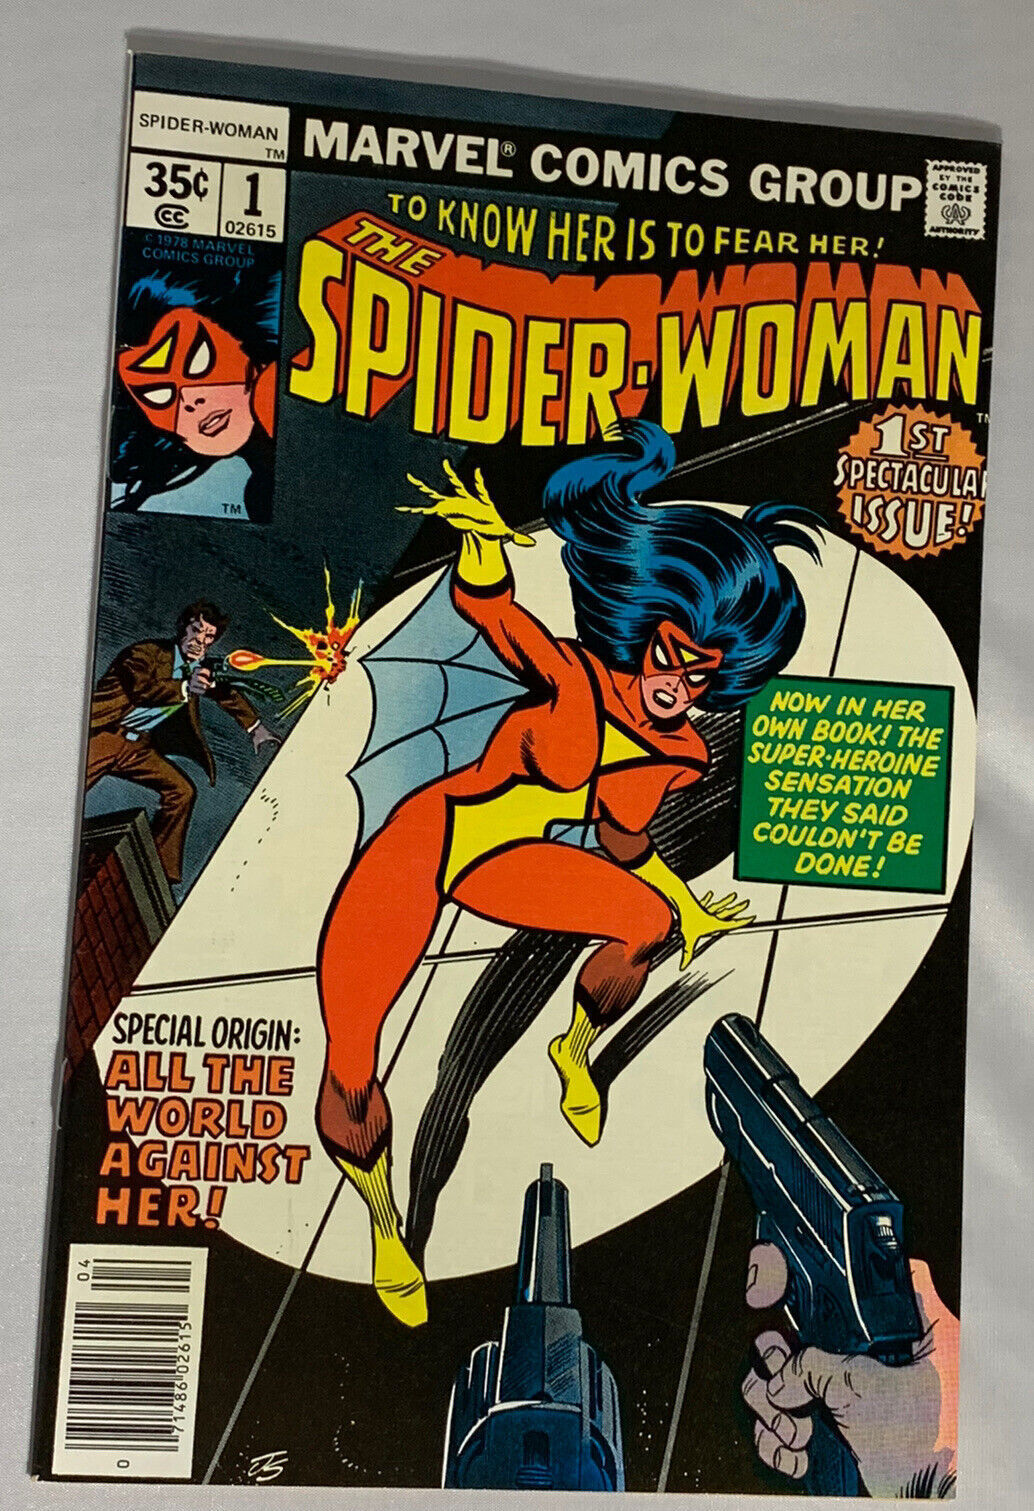 Spider-Woman #1 (1978) in 9.4 Near Mint